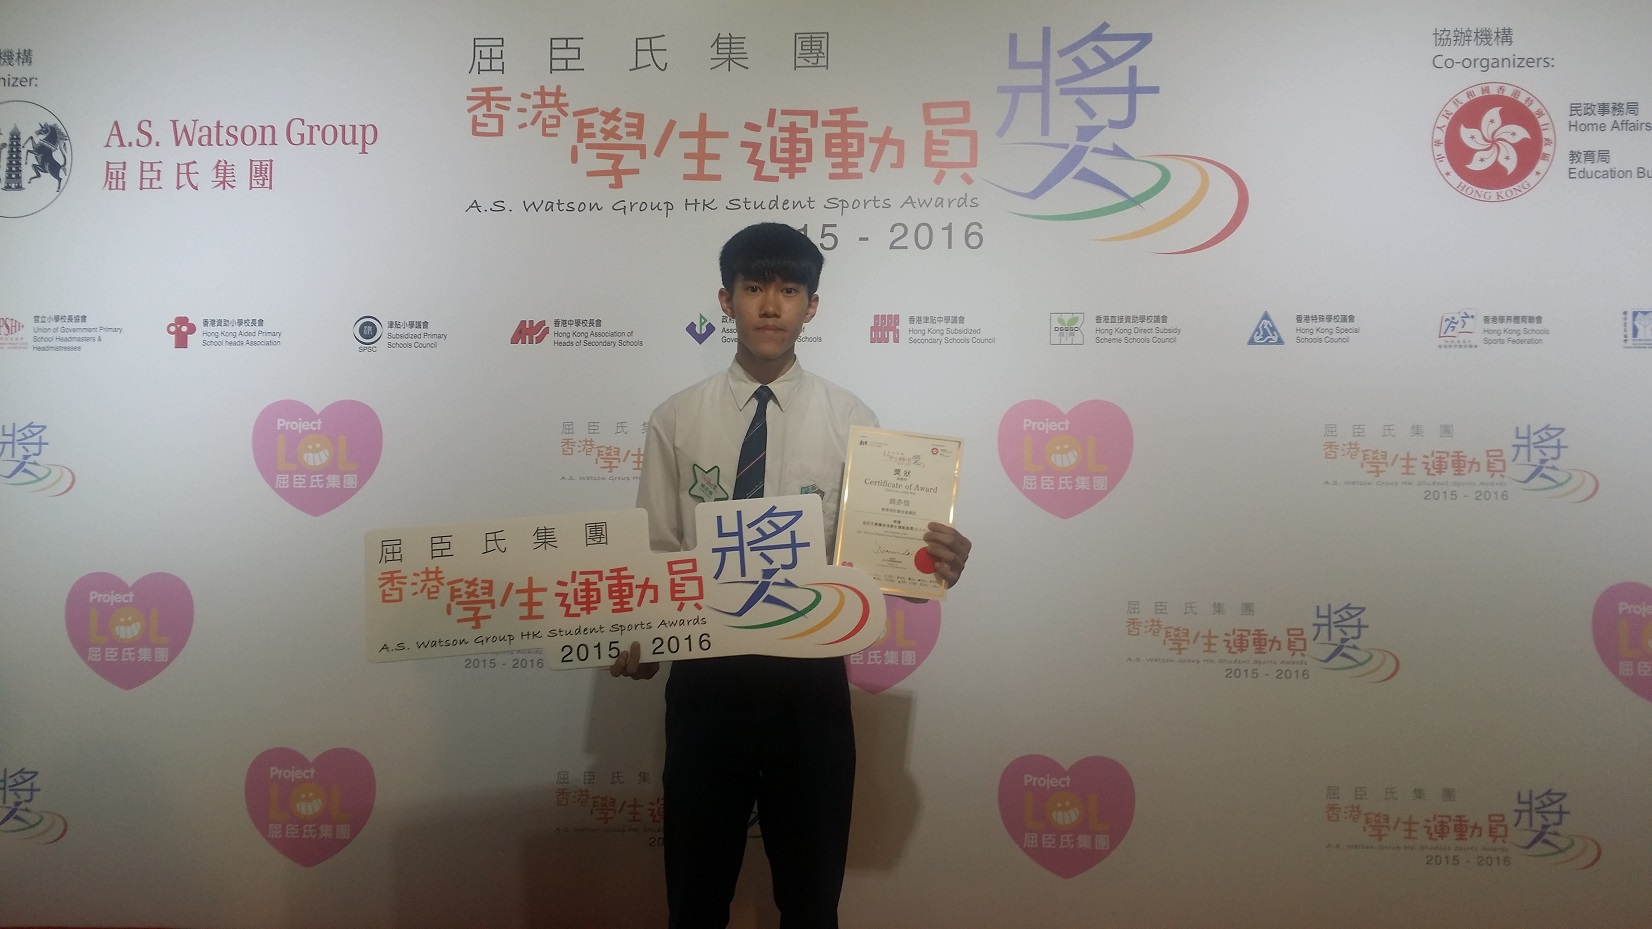 A.S. Watson Group HK Student Sports Awards (6L Wilson Yiu)